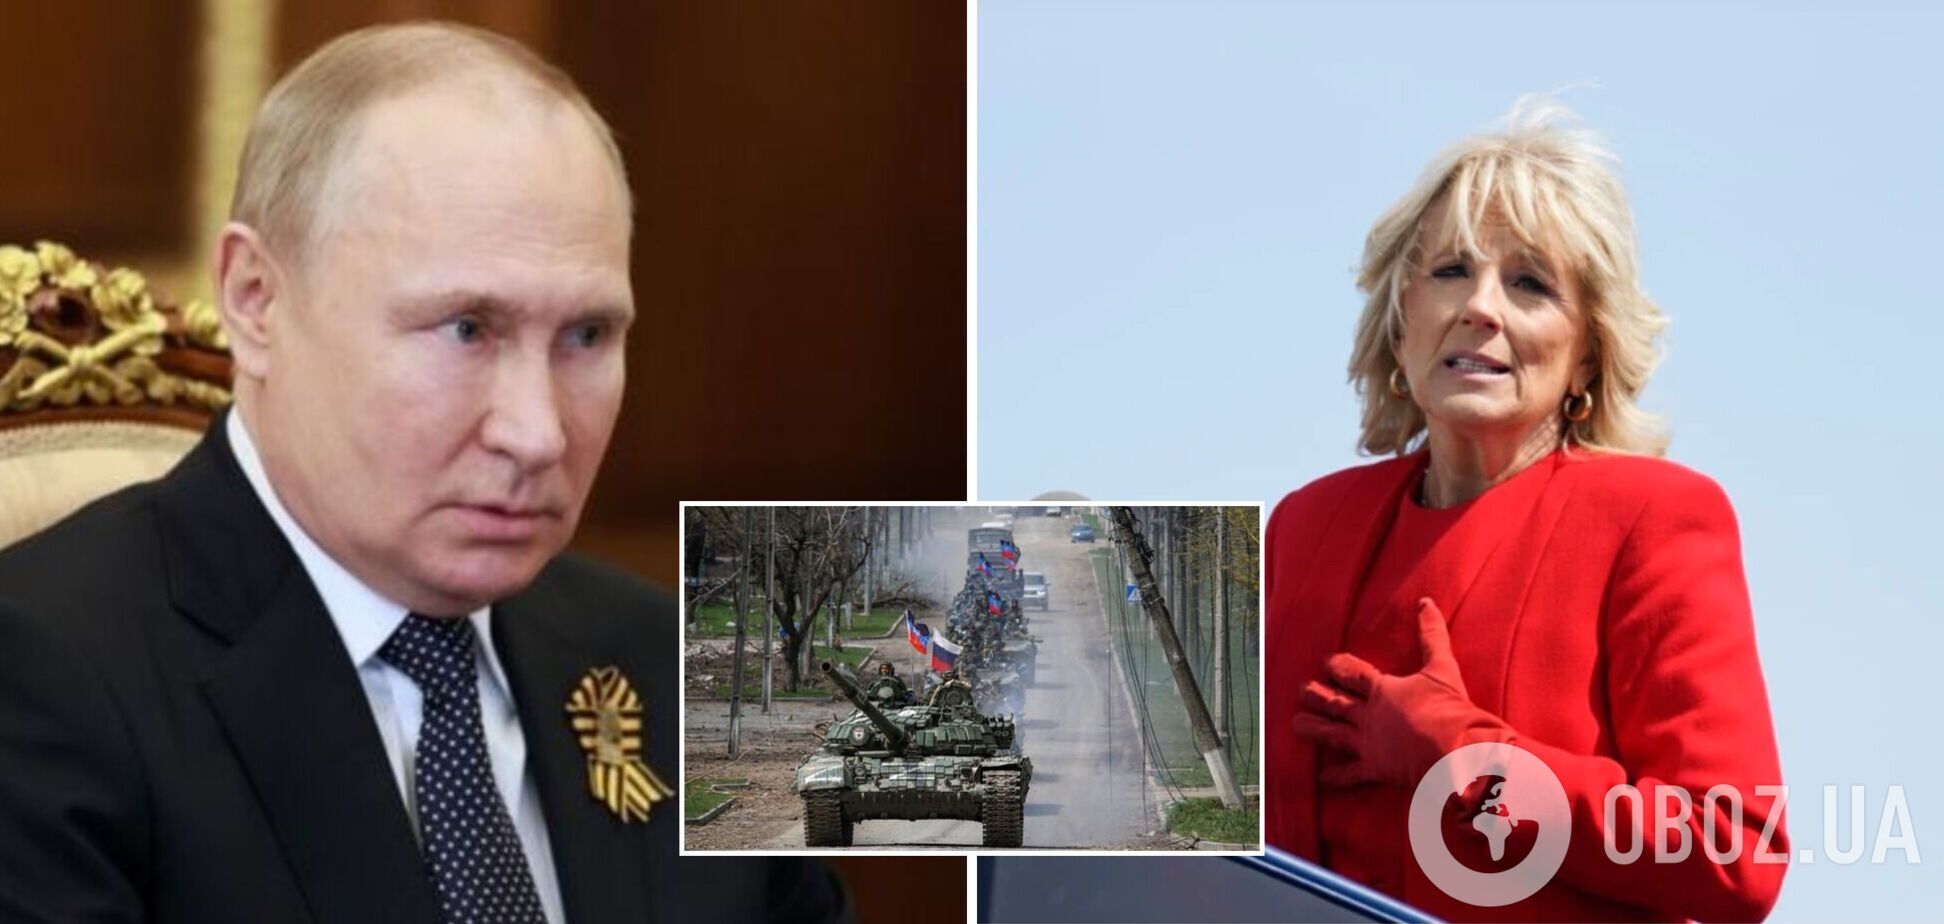 'Прекратите эту нелепую войну!' Жена Байдена обратилась к Путину